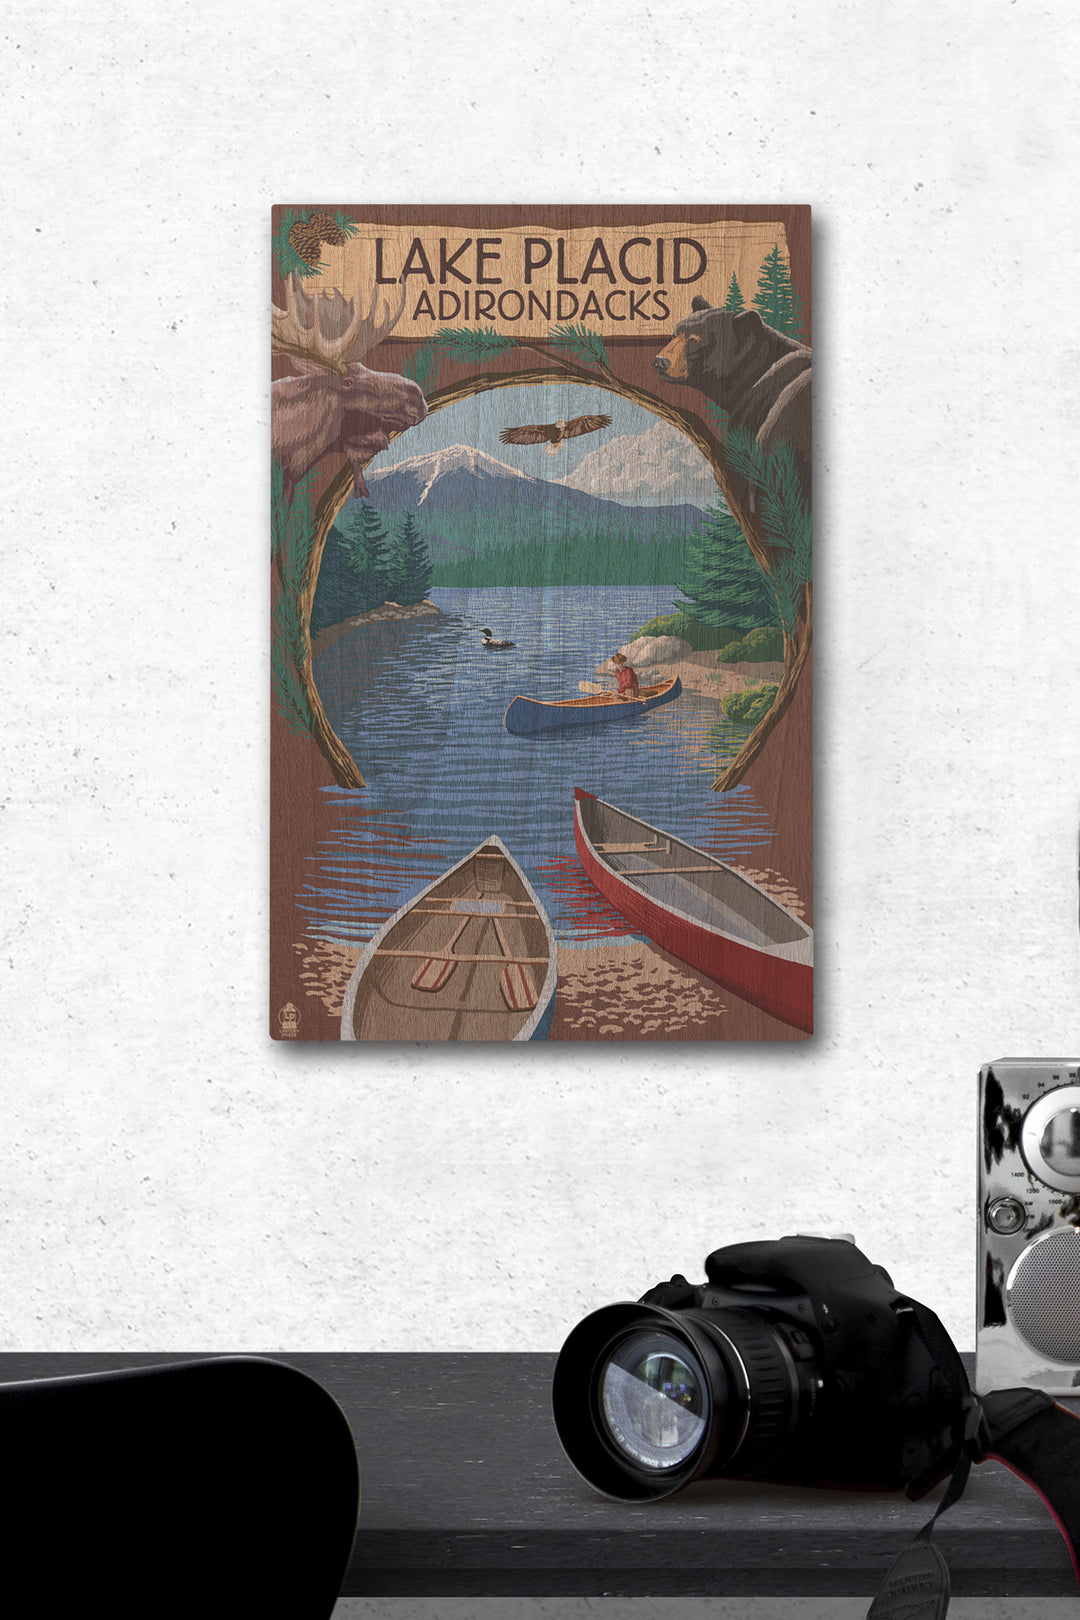 Lake Placid, New York, Adirondacks Canoe Scene, Lantern Press Artwork, Wood Signs and Postcards